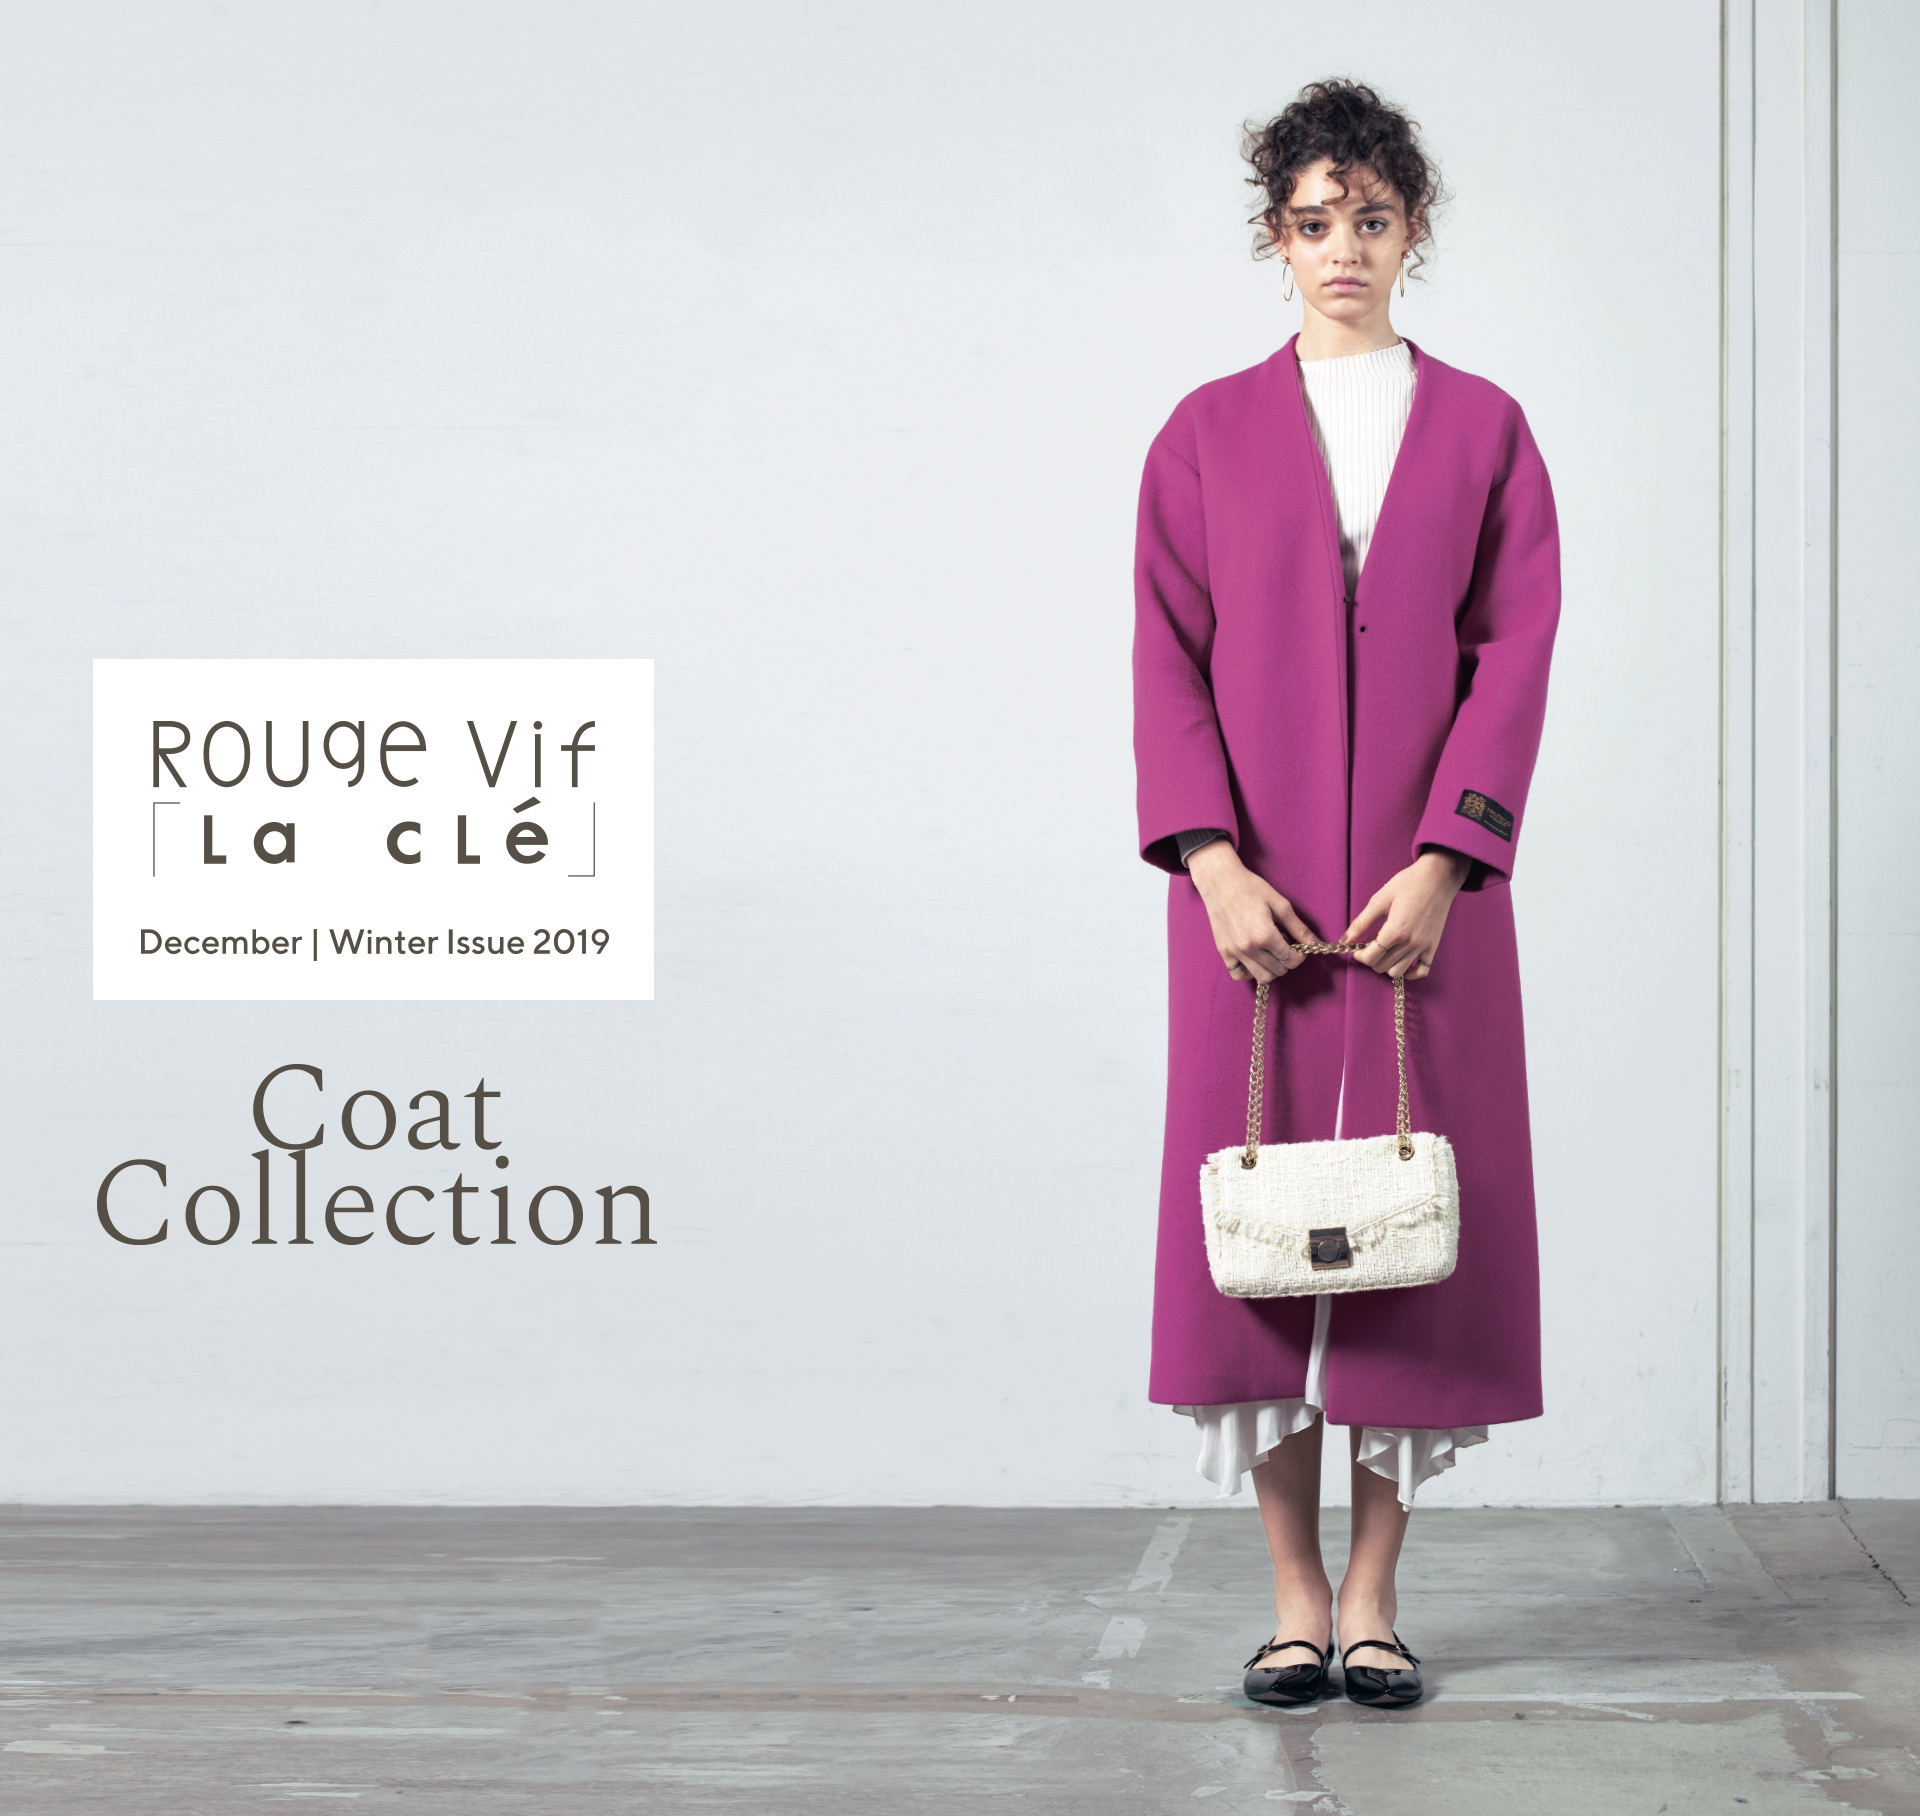 Rouge vif la cleの名品コートを使った10のコートスタイルをご紹介 - Rouve vif la cle